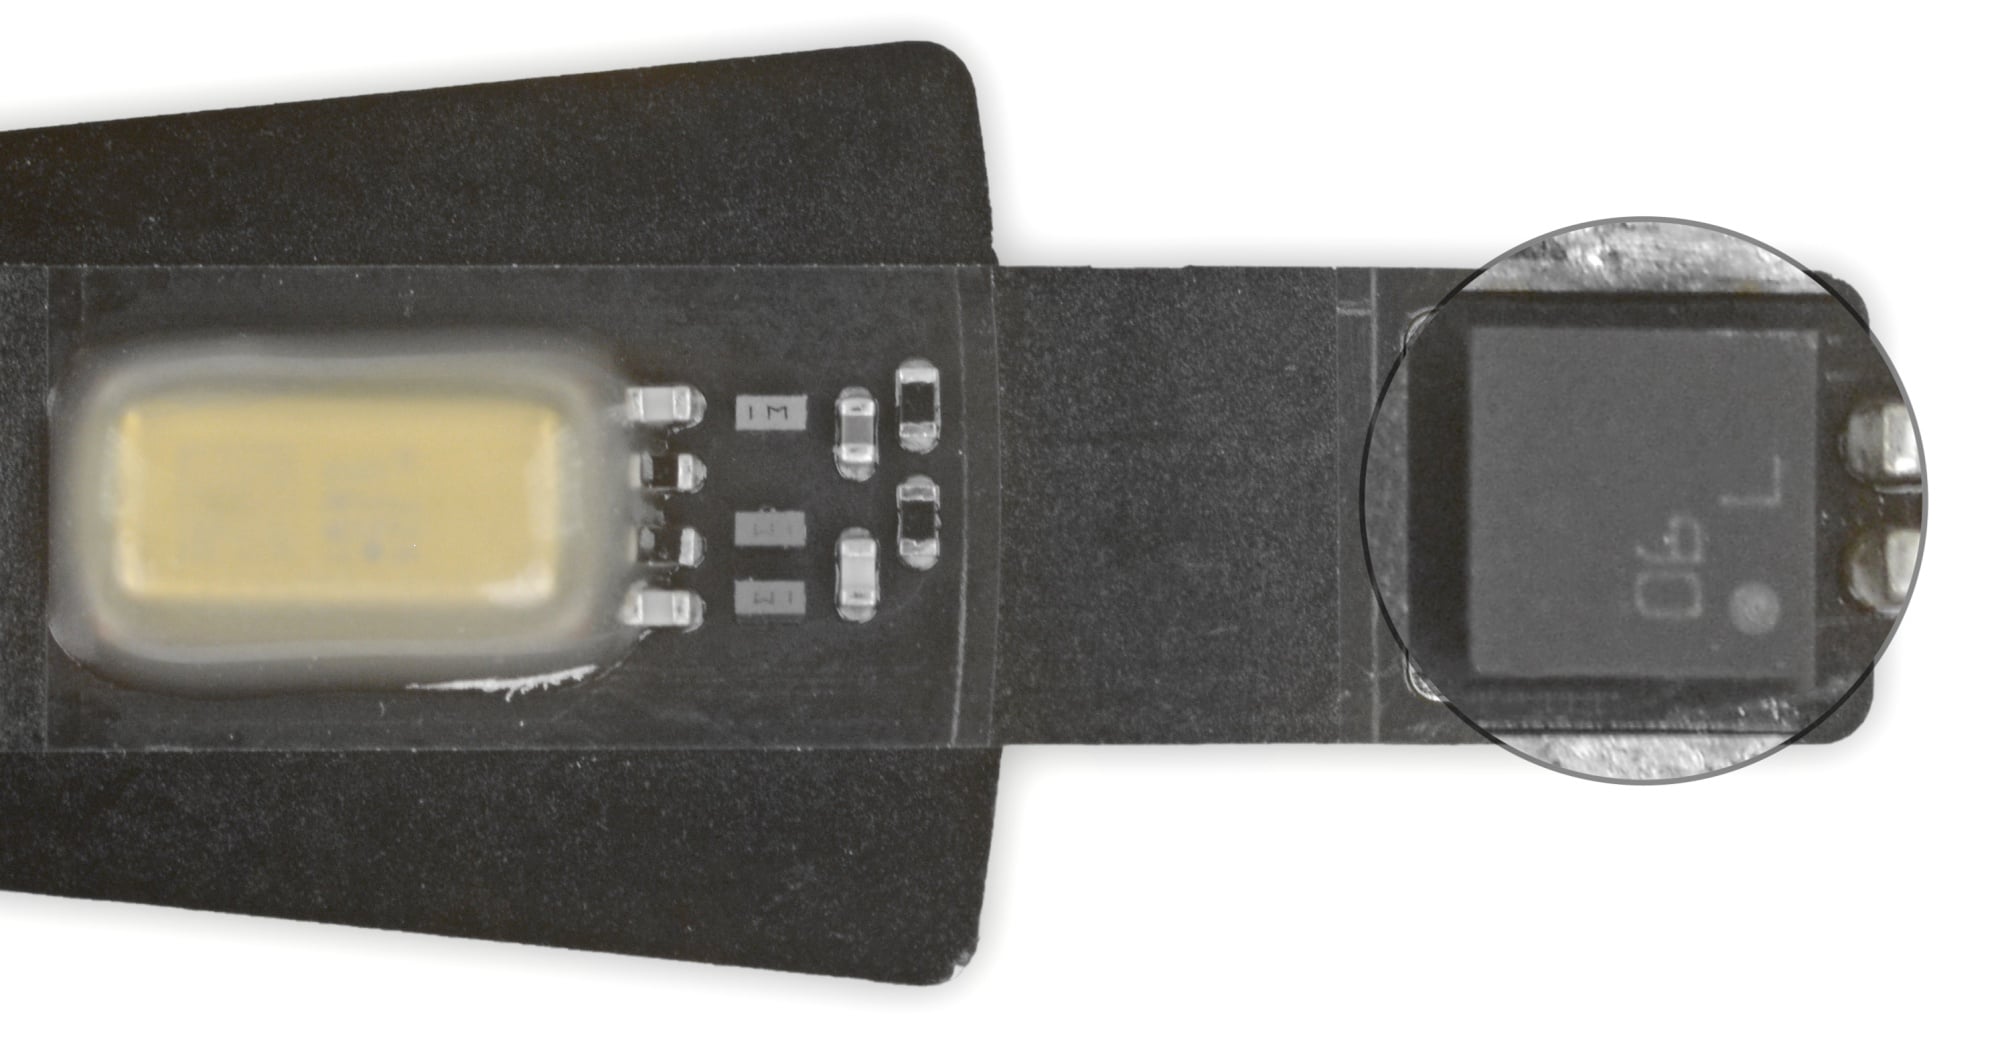 HomePod mini temperature sensor